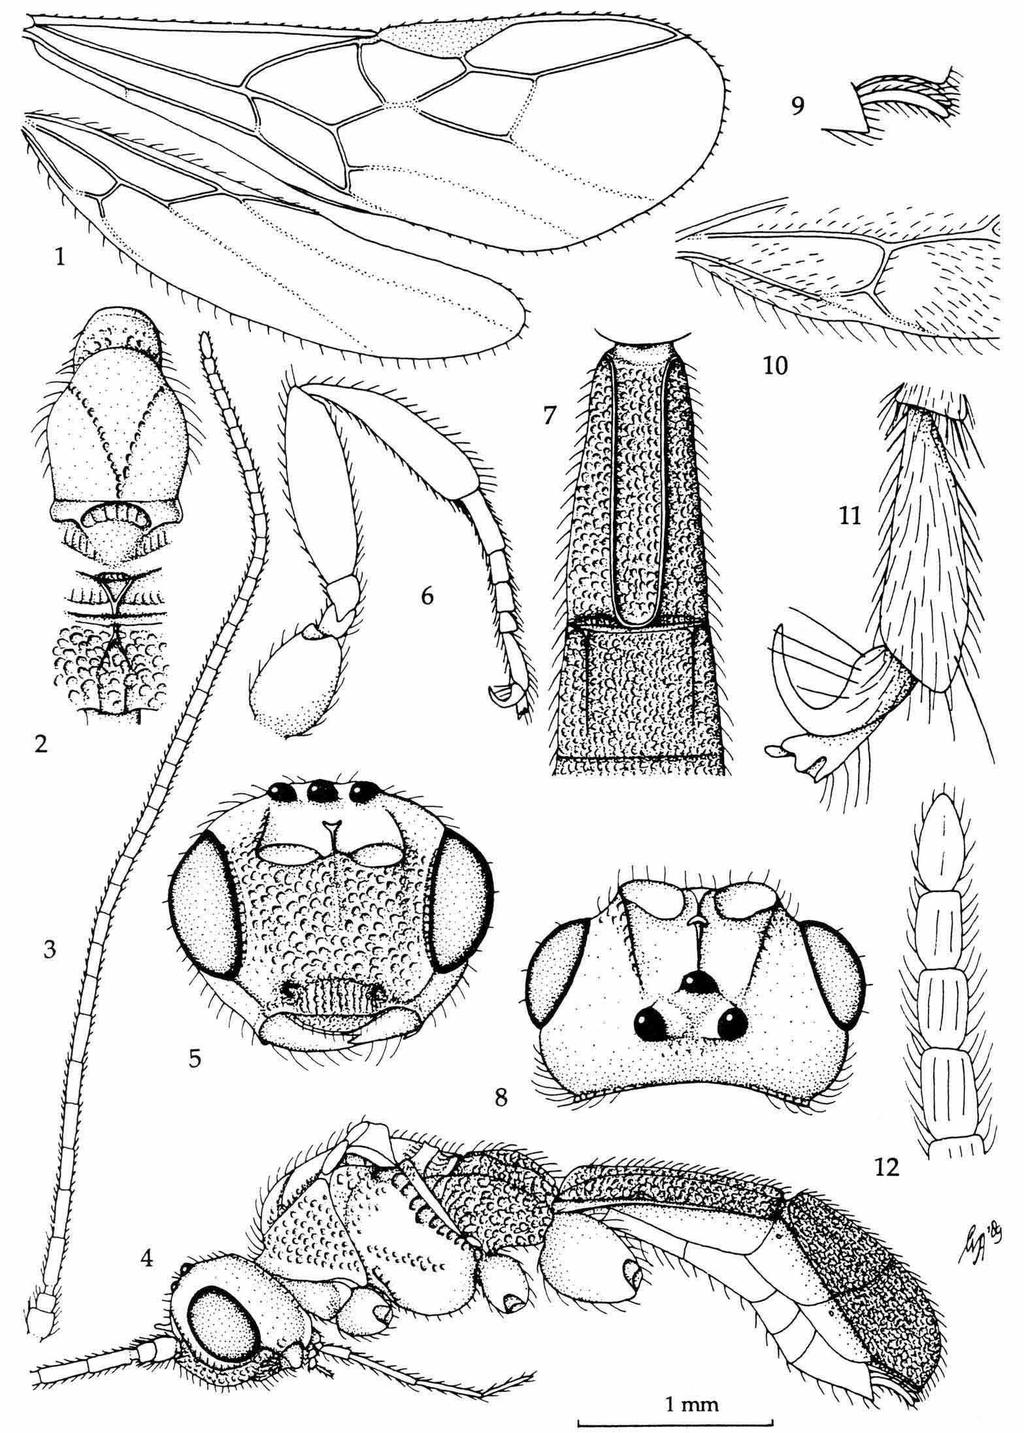 VAN ACHTERBERG & QUICKE: AFROCAMPSIS 157 Figs. 1-12, Afrocampsis griseosetosus gen. nov. & spec, nov., holotype.